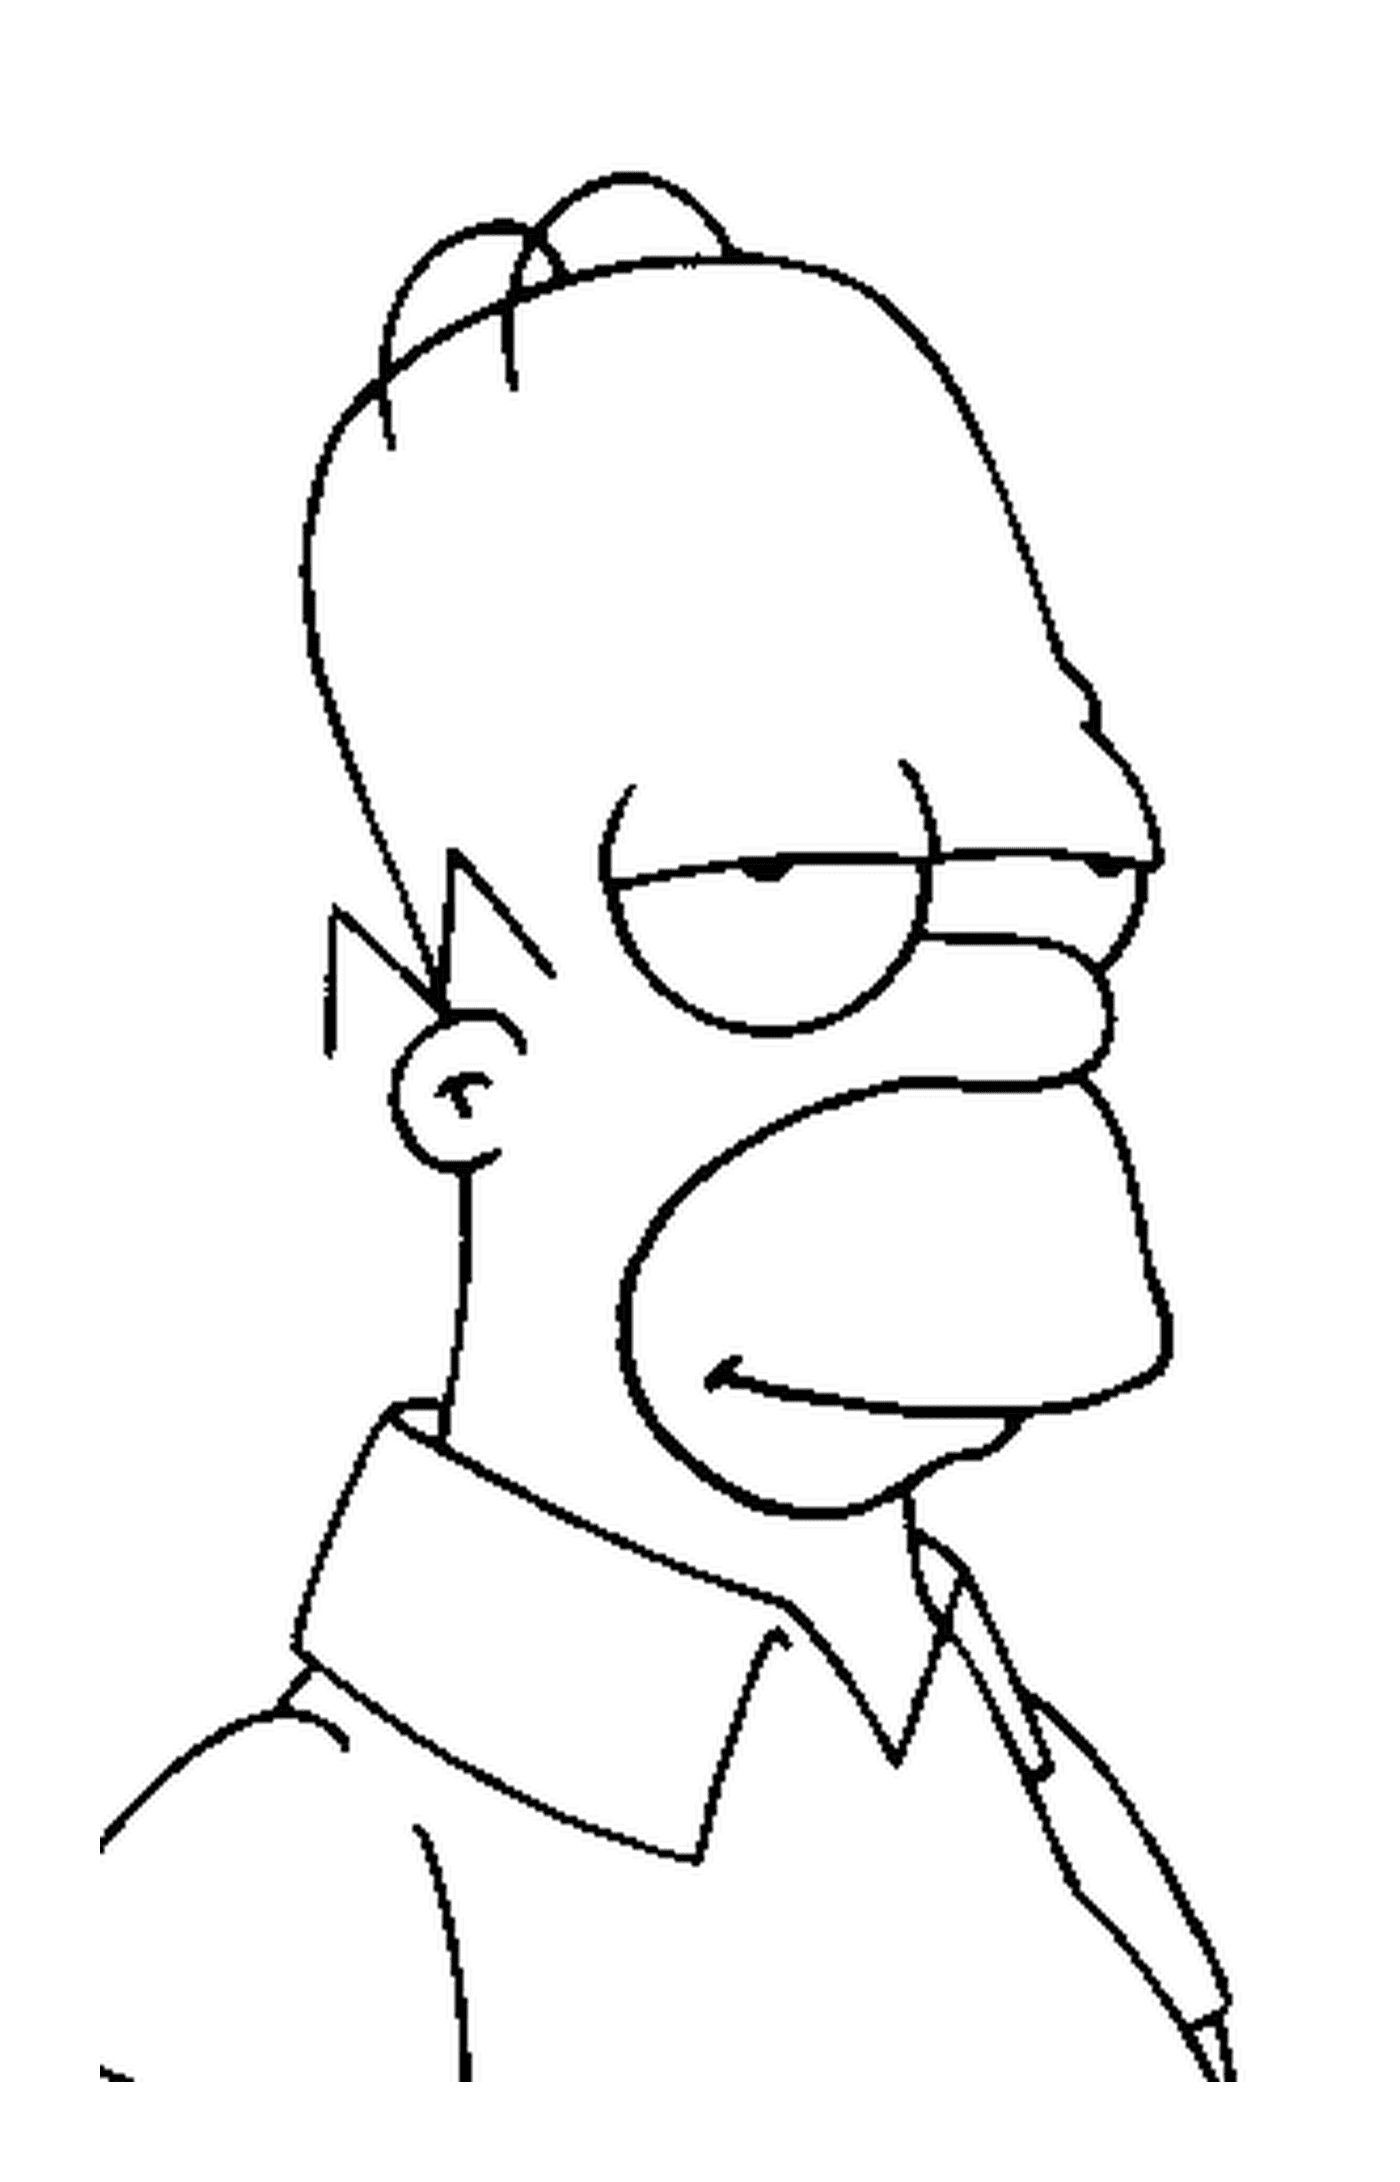  Homer Simpson's mid-closing eyes 